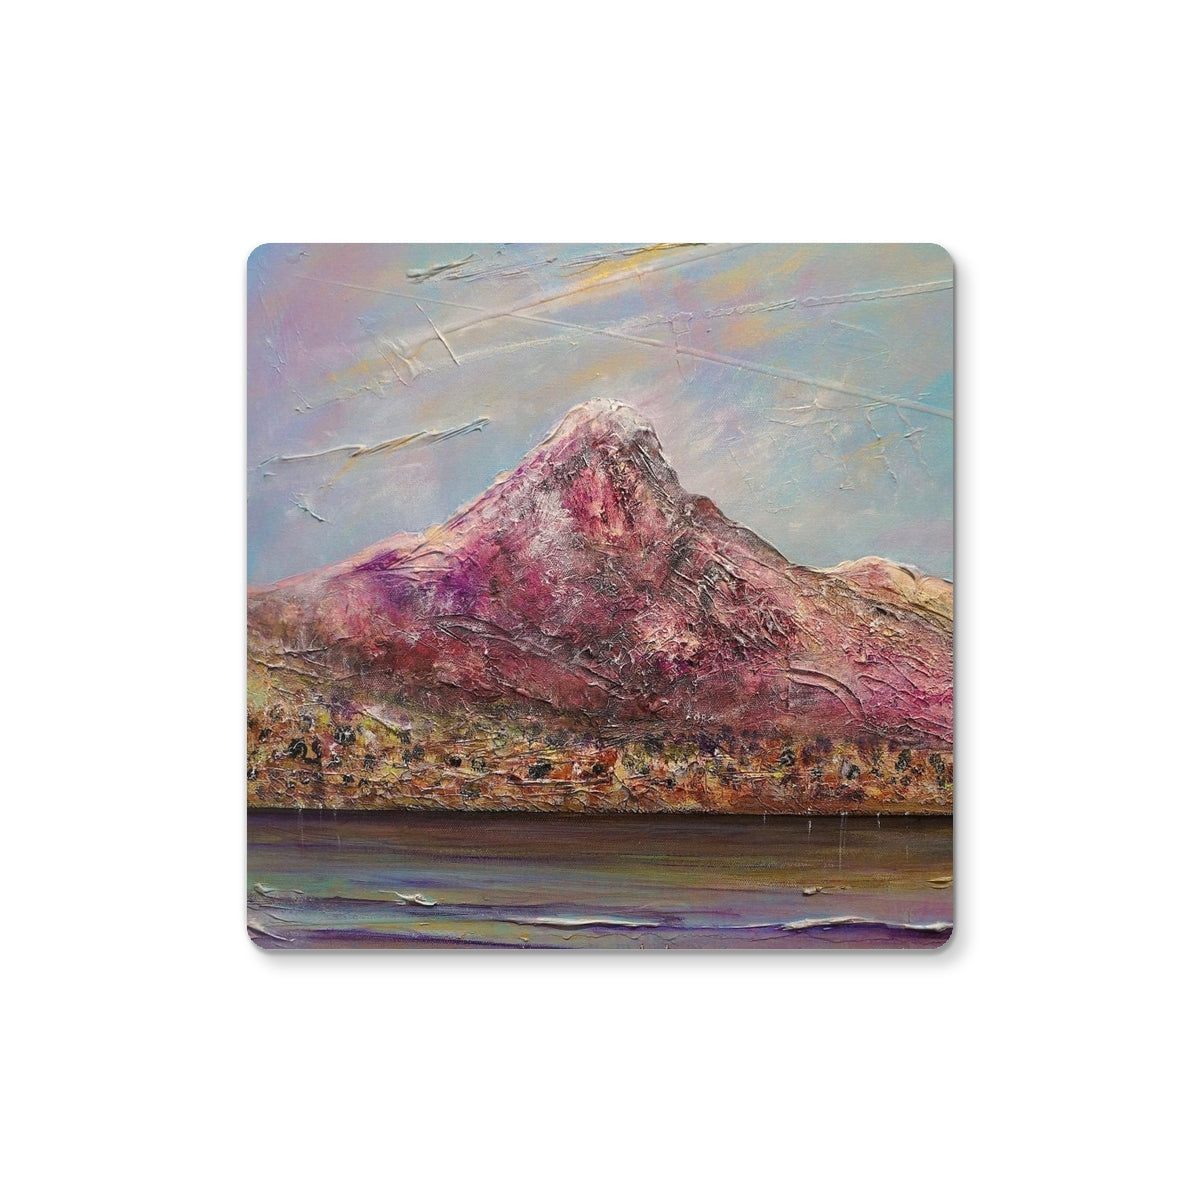 Ben Lomond Art Gifts Coaster-Homeware-Scottish Lochs & Mountains Art Gallery-2 Coasters-Paintings, Prints, Homeware, Art Gifts From Scotland By Scottish Artist Kevin Hunter